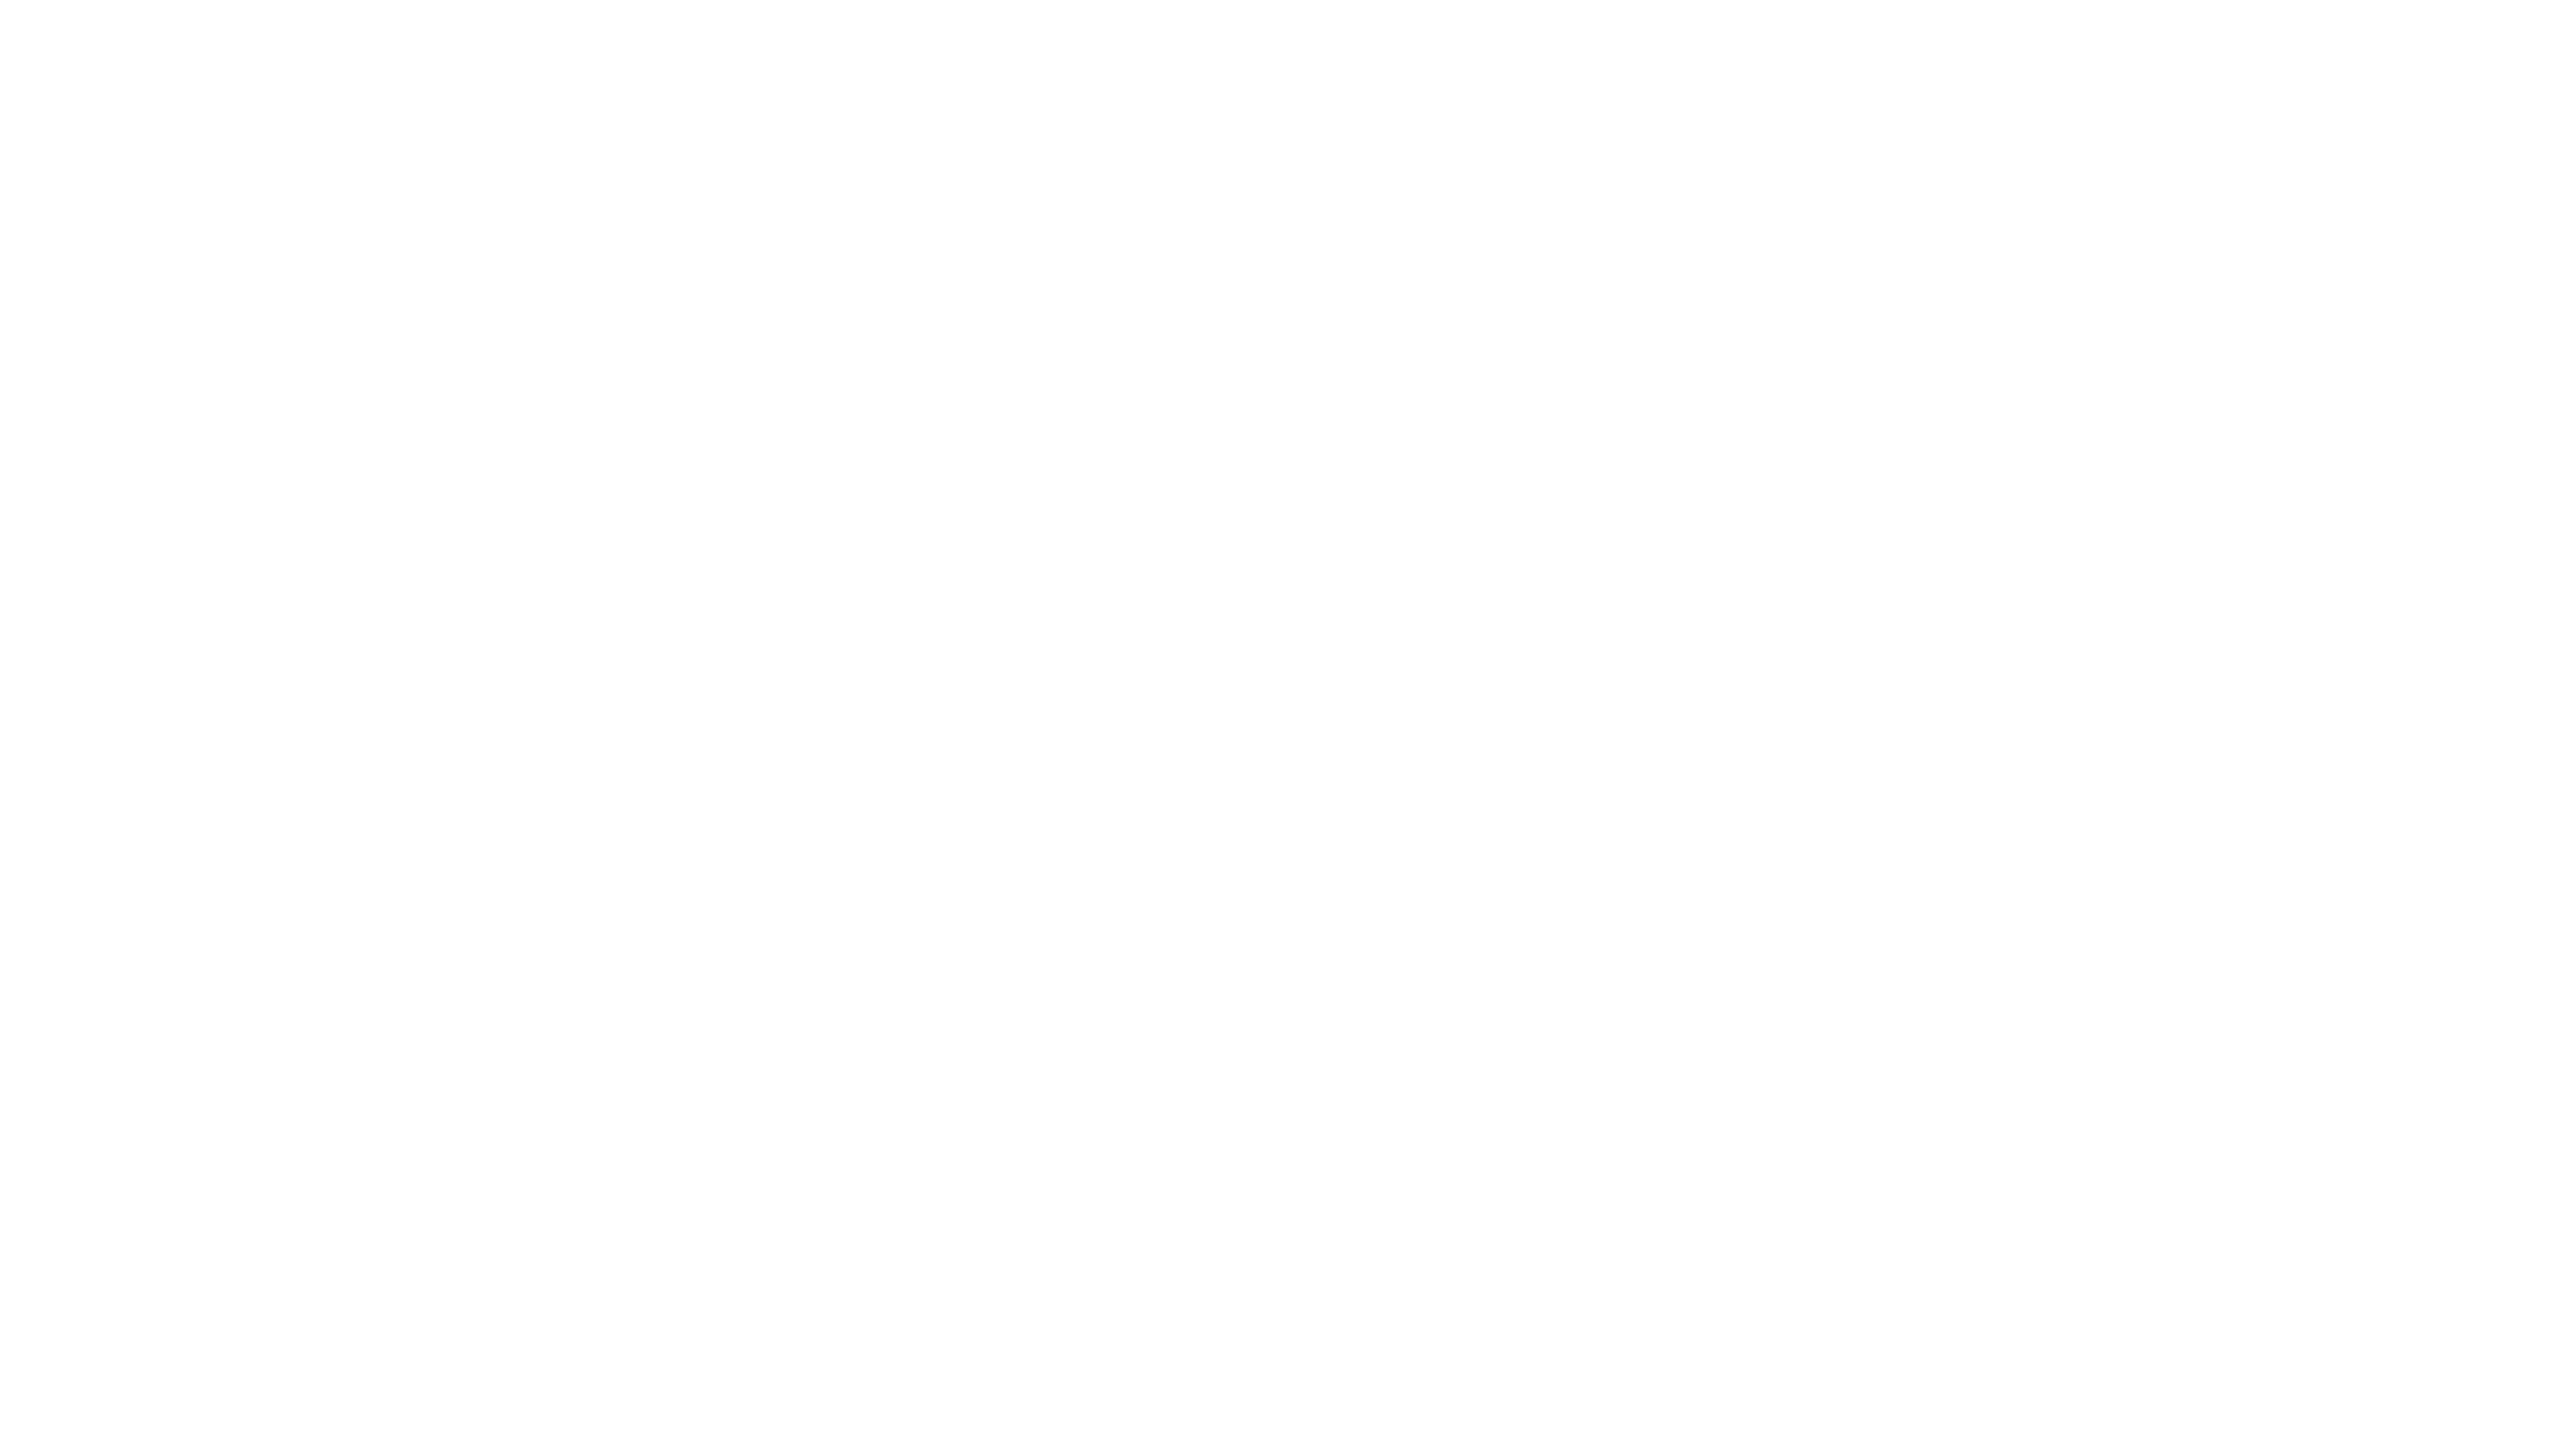 School of Image Arts